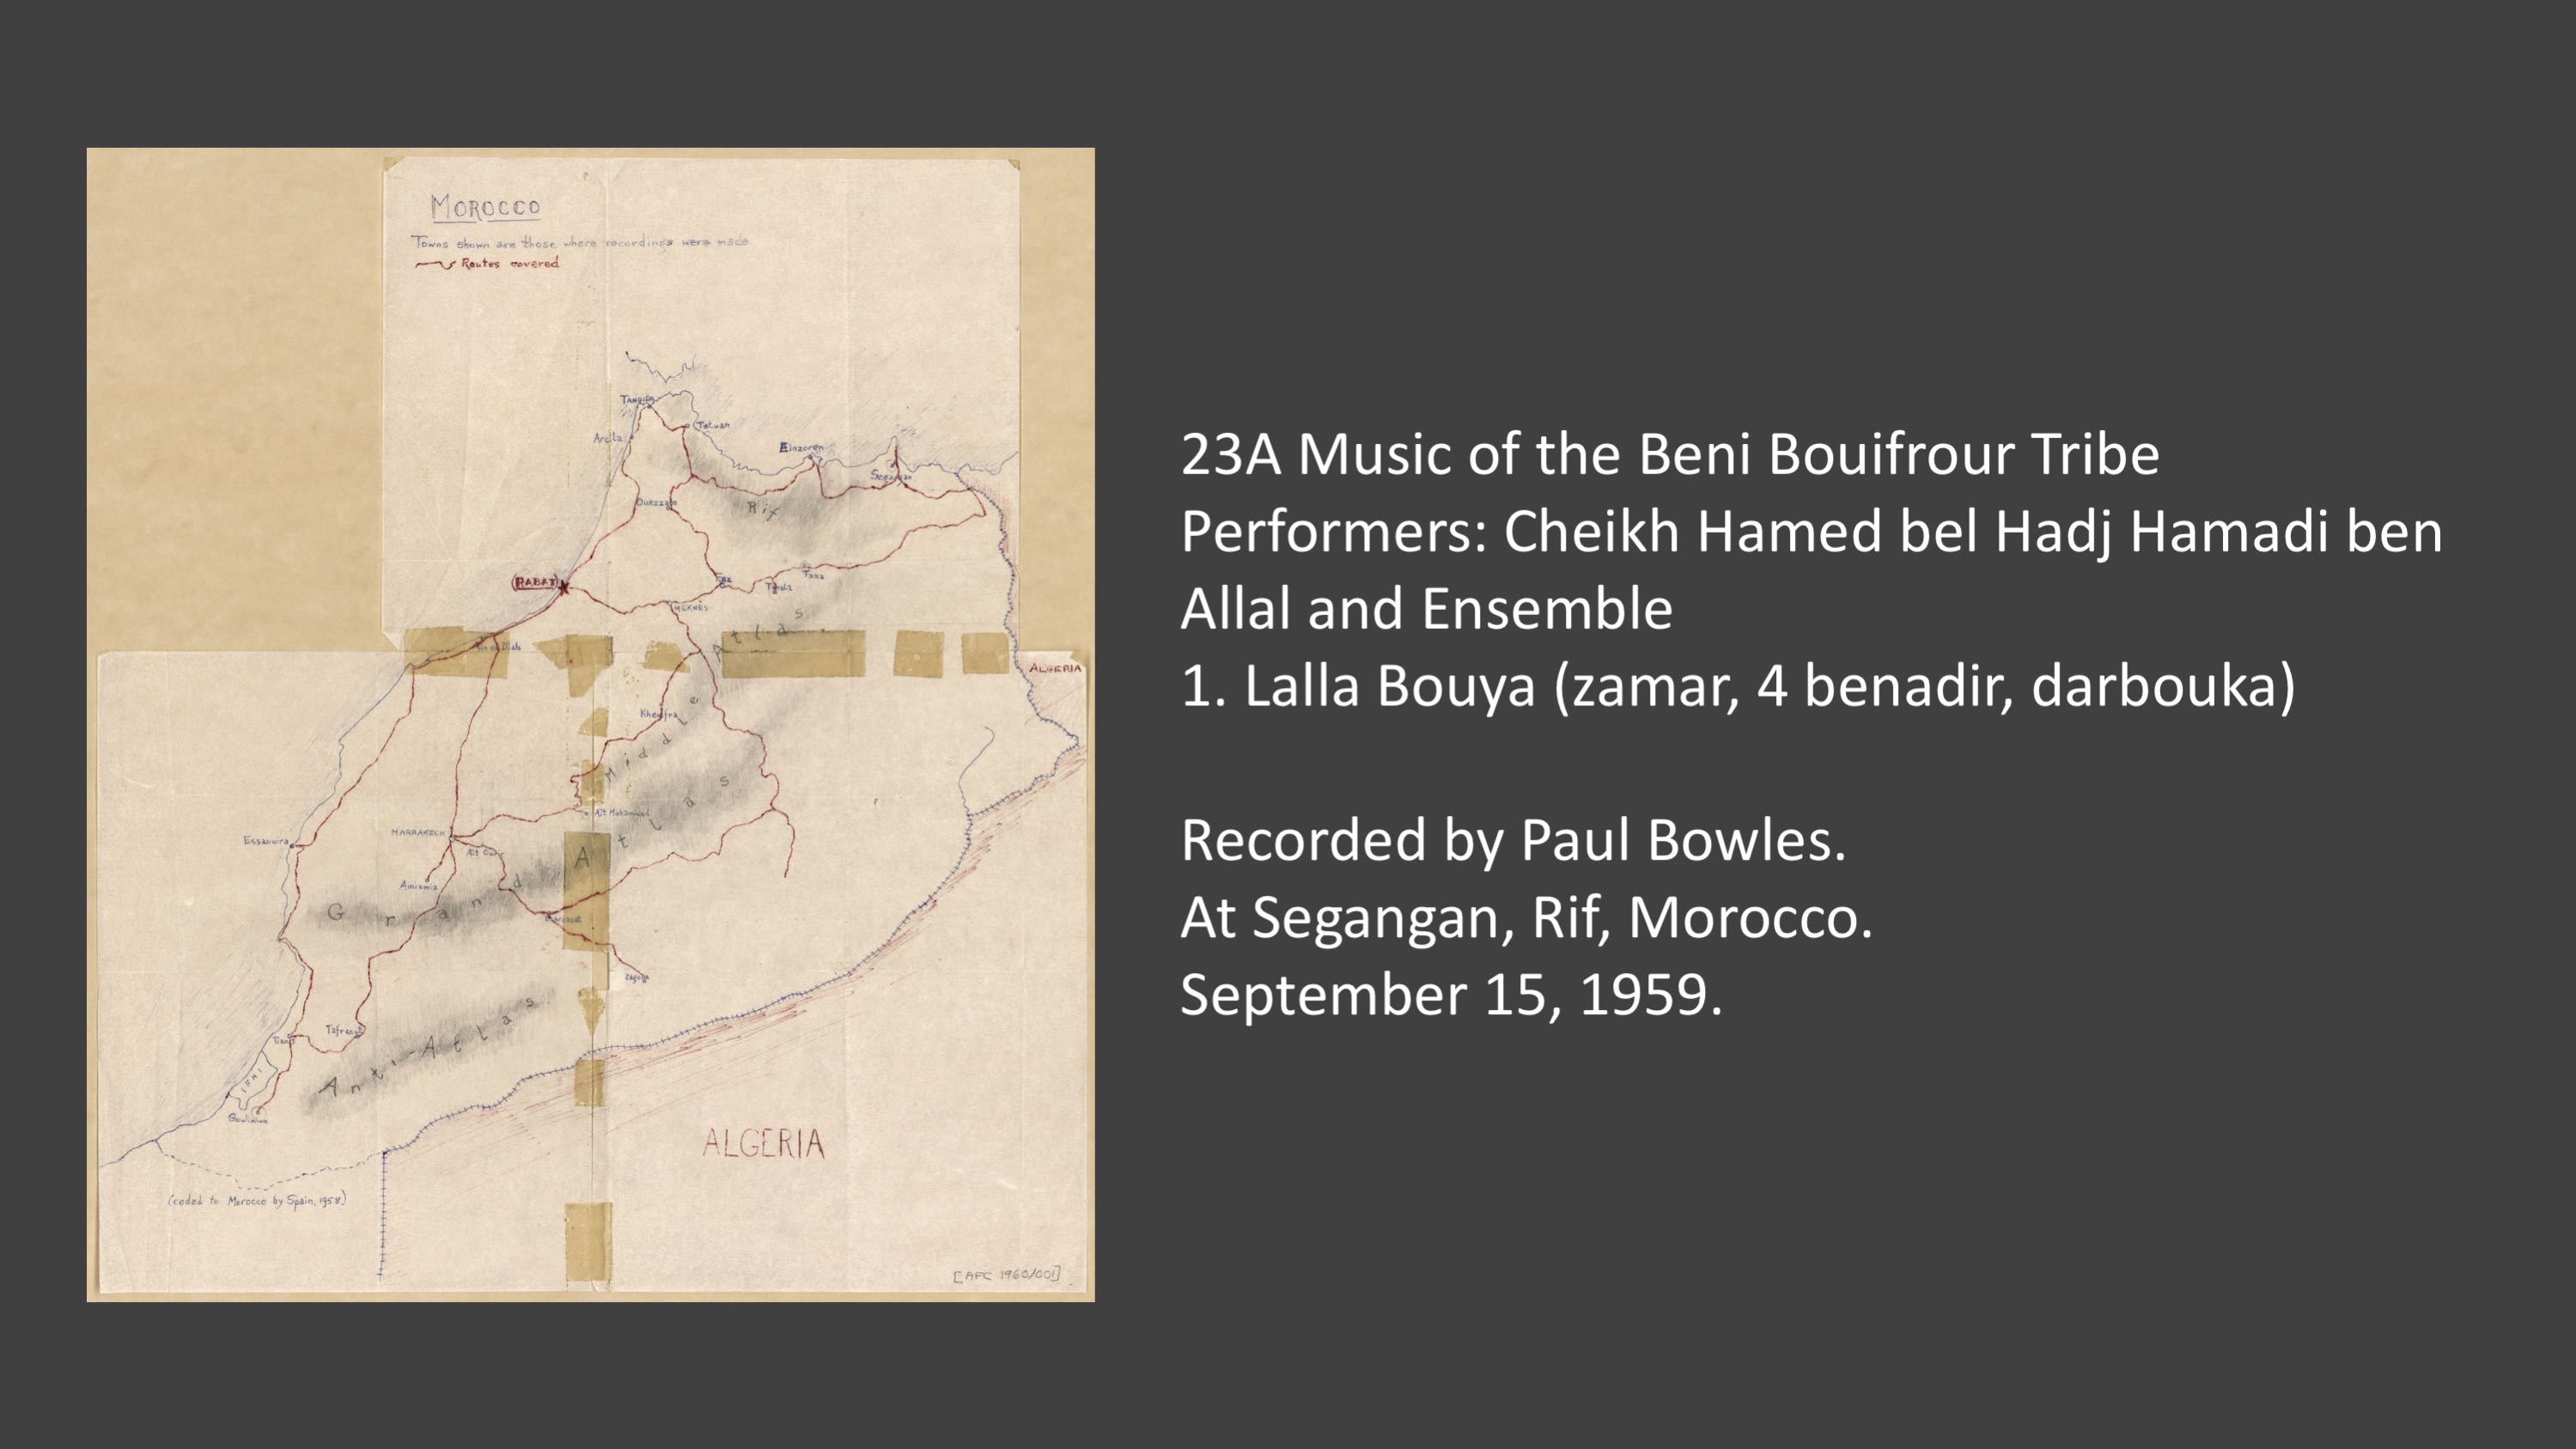 23A 1. Lalla Bouya (zamar, 4 benadir, darbouka)
Music of the Beni Bouifrour Tribe
Performers: Cheikh Hamed bel Hadj Hamadi ben Allal and Ensemble
Recorded by Paul Bowles at Segangan, Rif, Morocco. September 15, 1959.